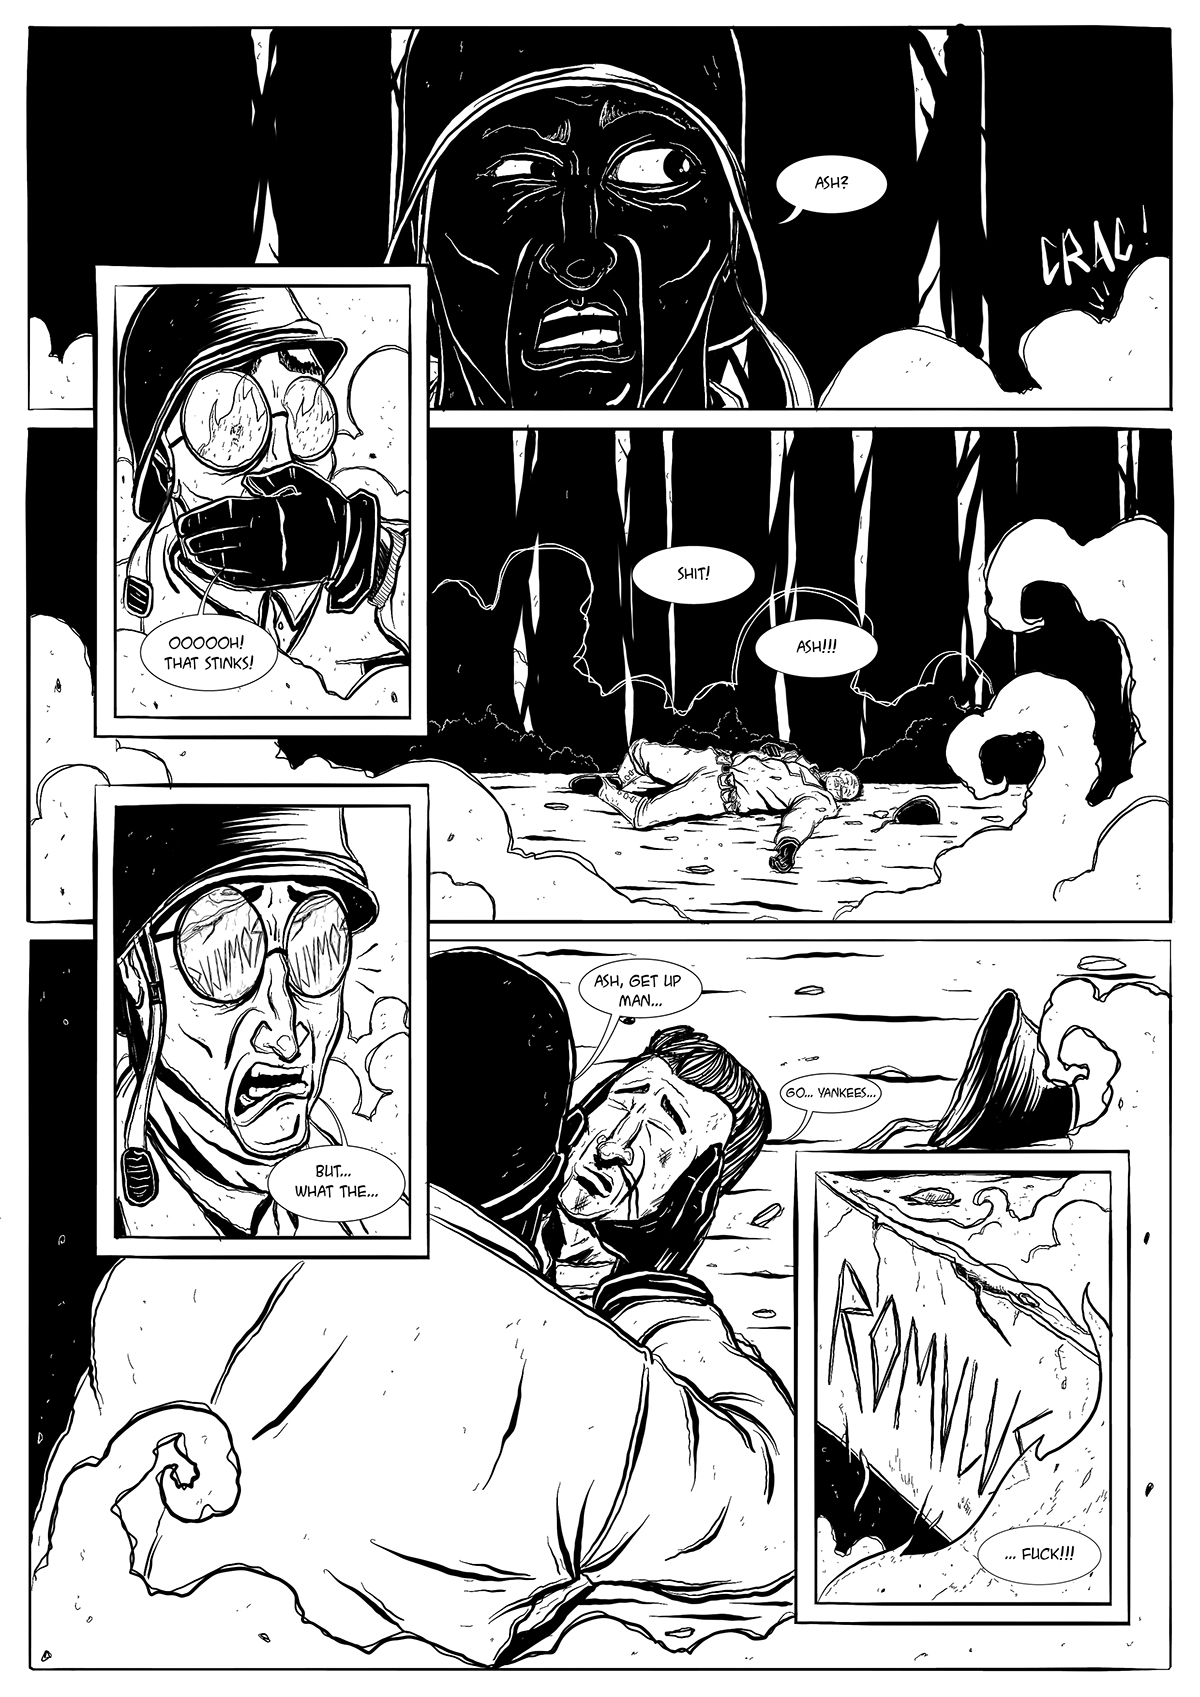 ILLUSTRATION  Comic Book Tank strip storyboard War Retro comics